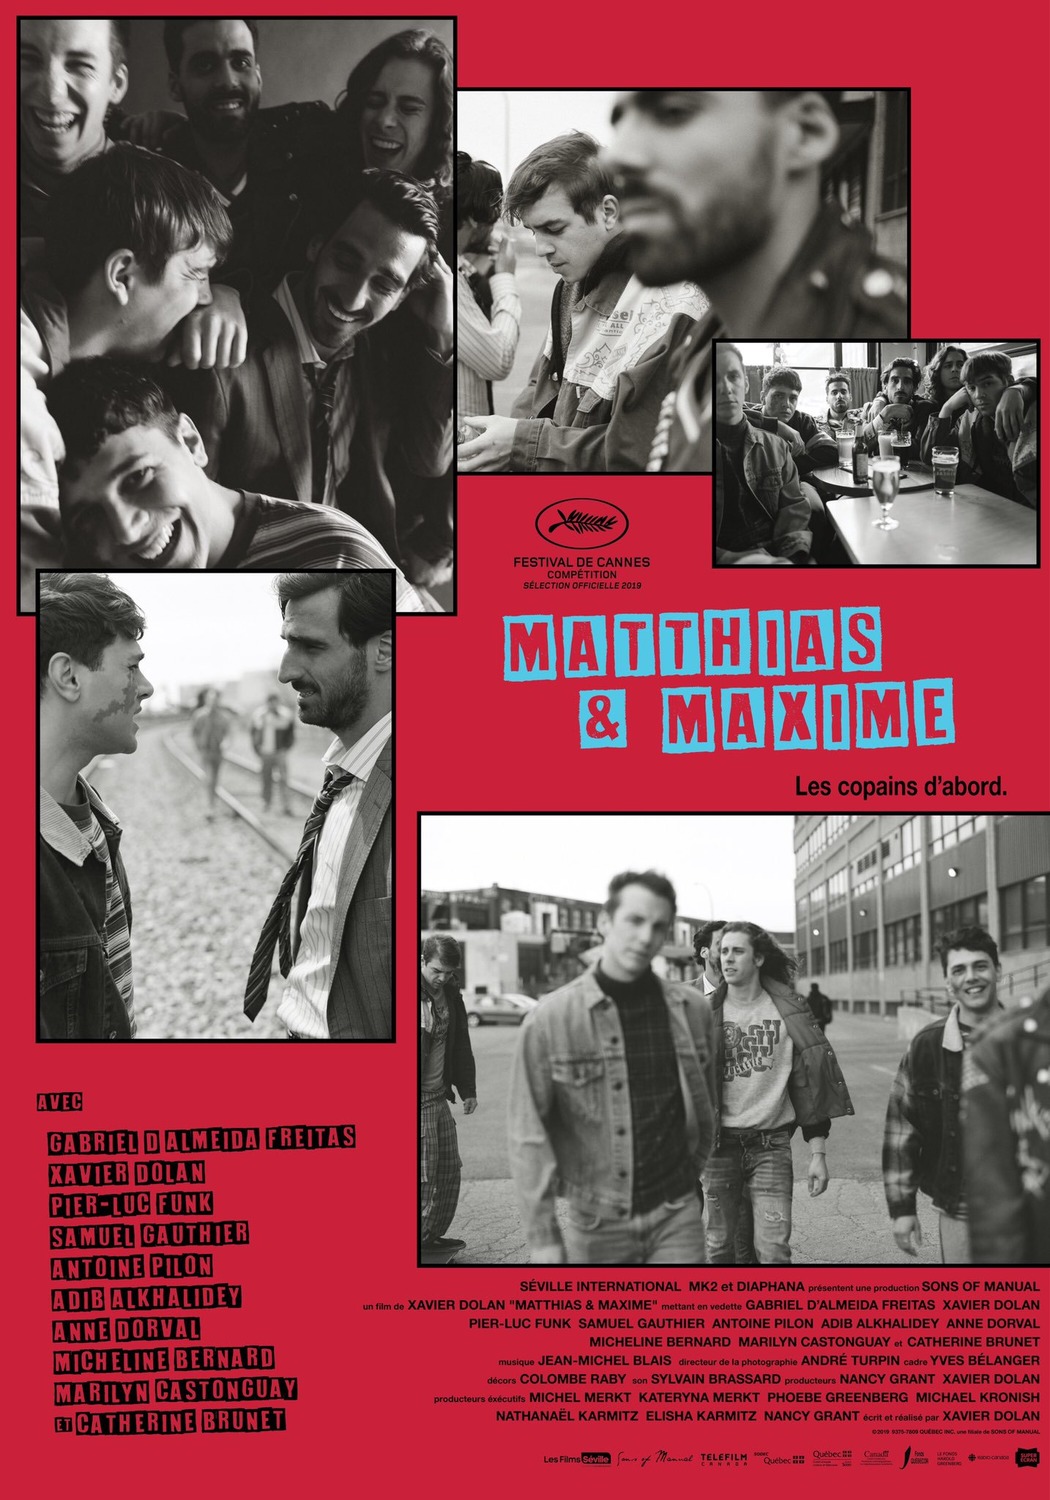 Extra Large Movie Poster Image for Matthias et Maxime 